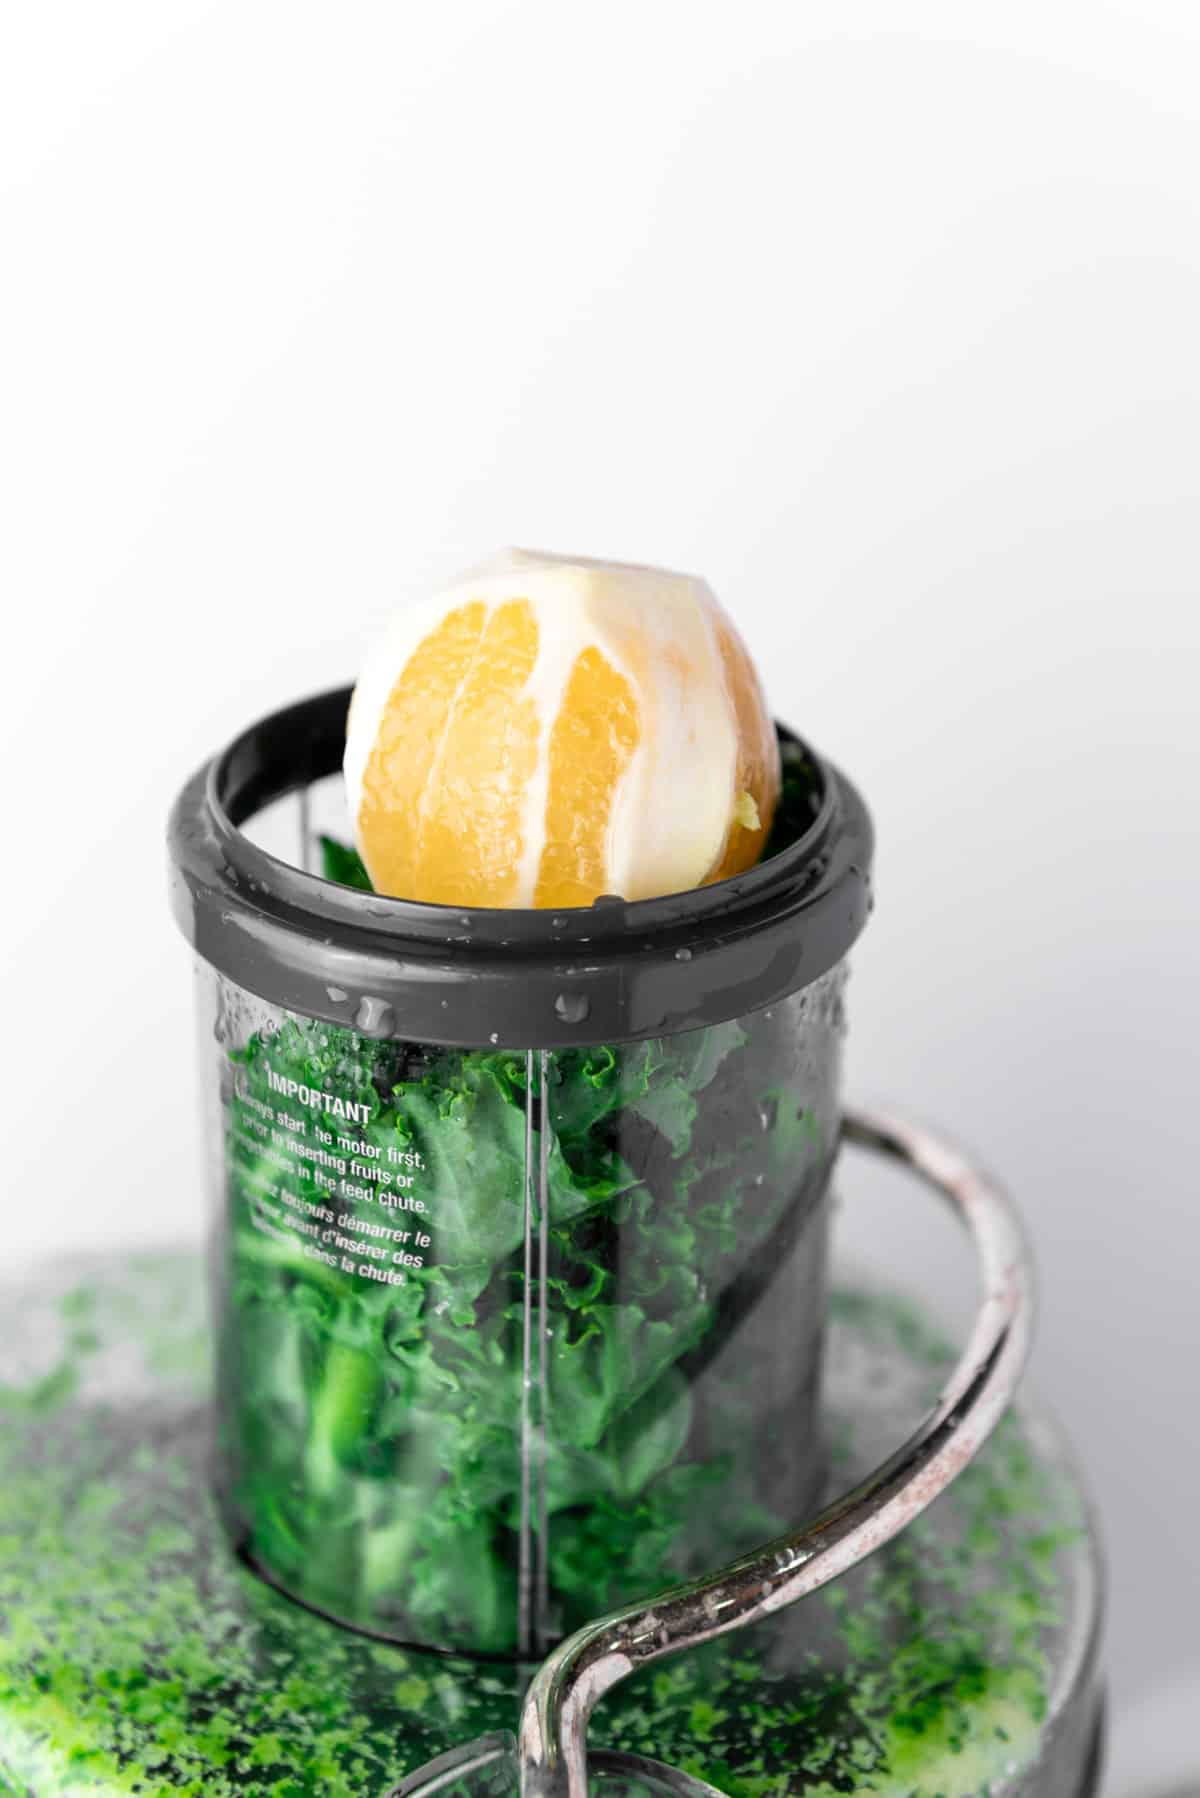 lemon and kale in juicer